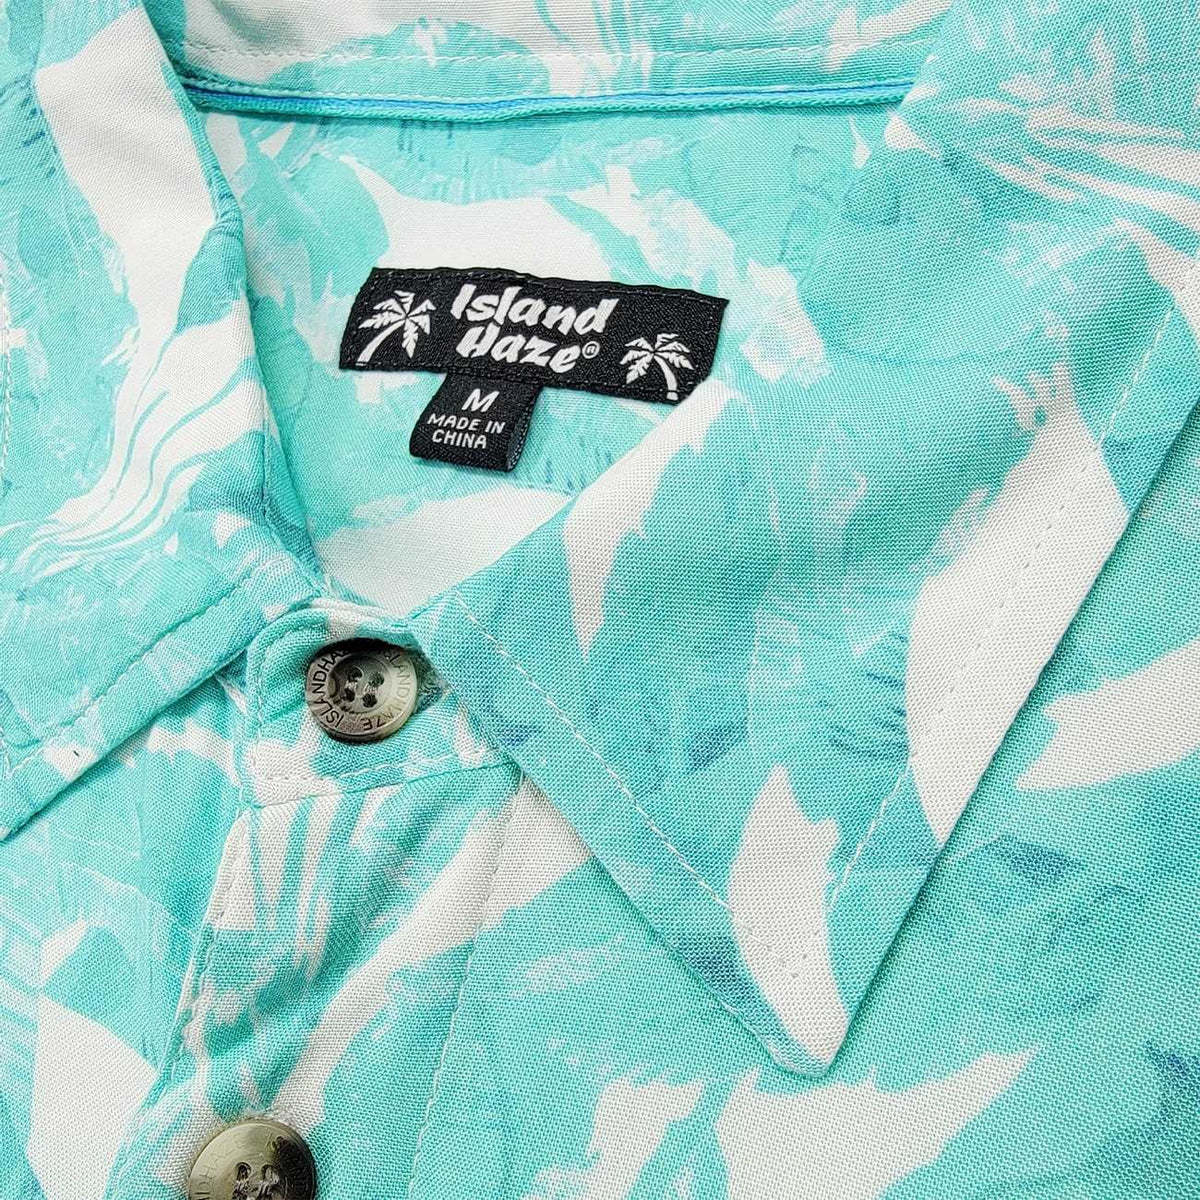 Hawaiian shirts tropical shirt Key West Islandhaze